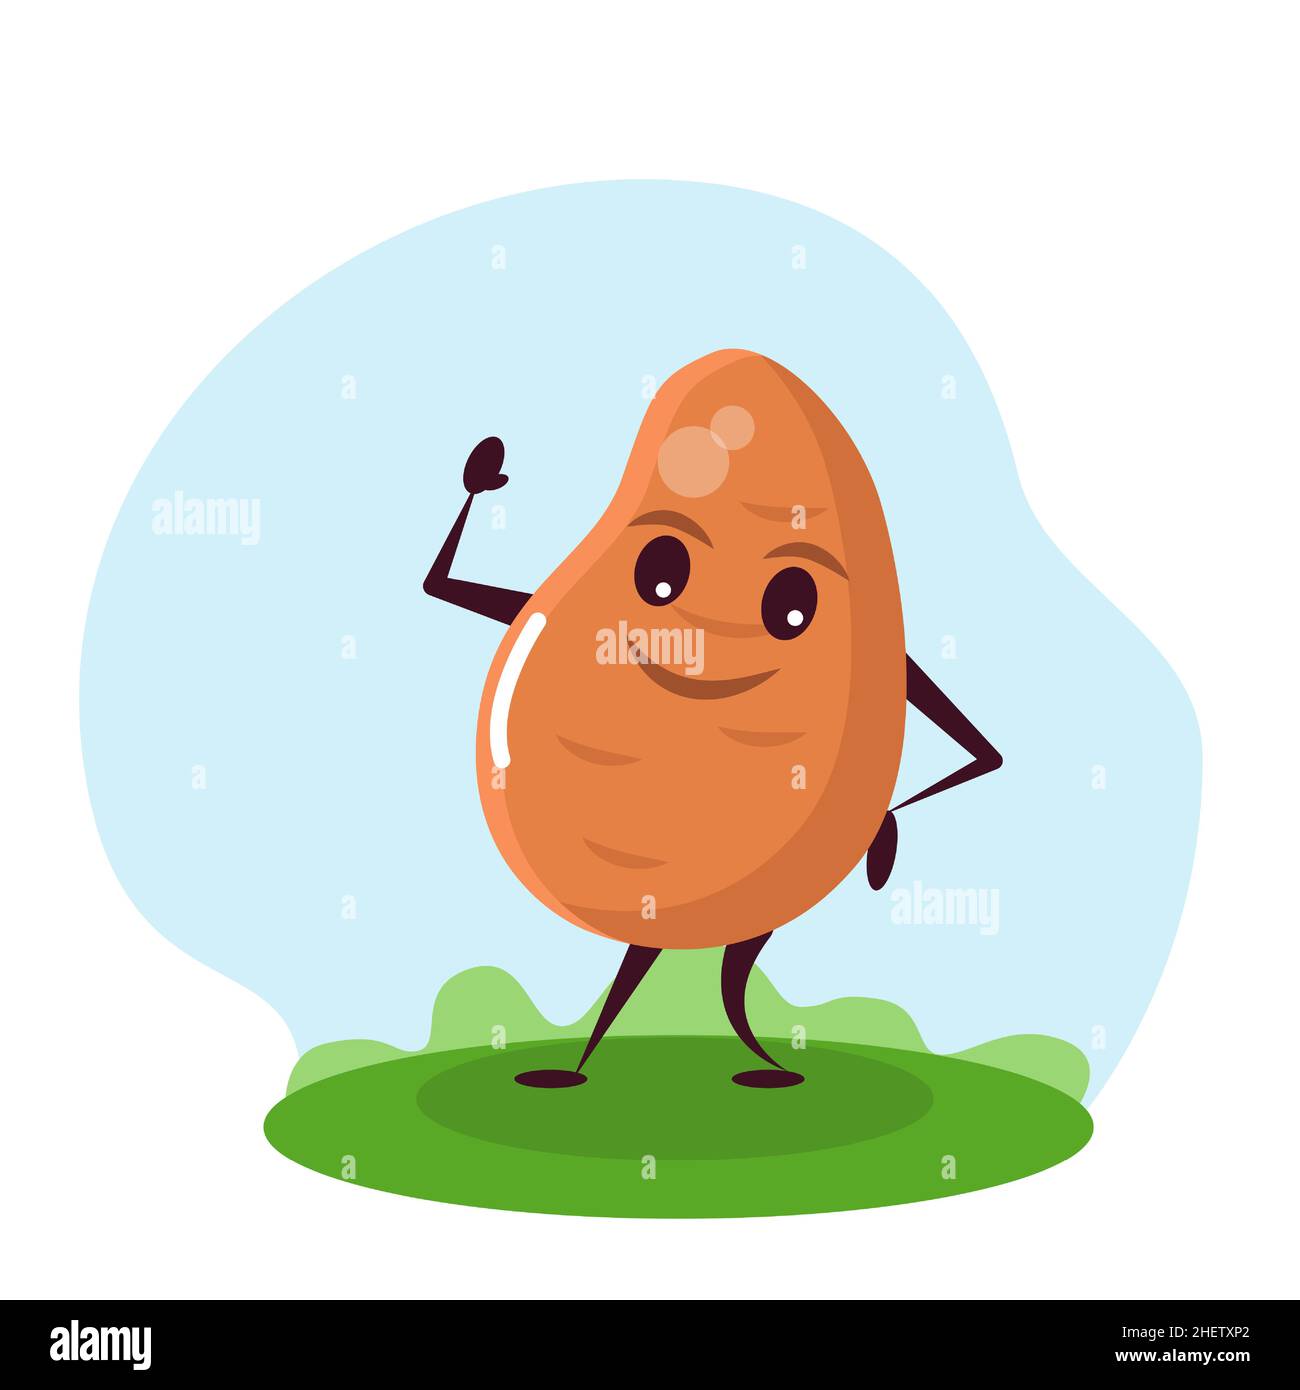 Funny potato character. Vector illustration in cartoon style for children. Stock Vector